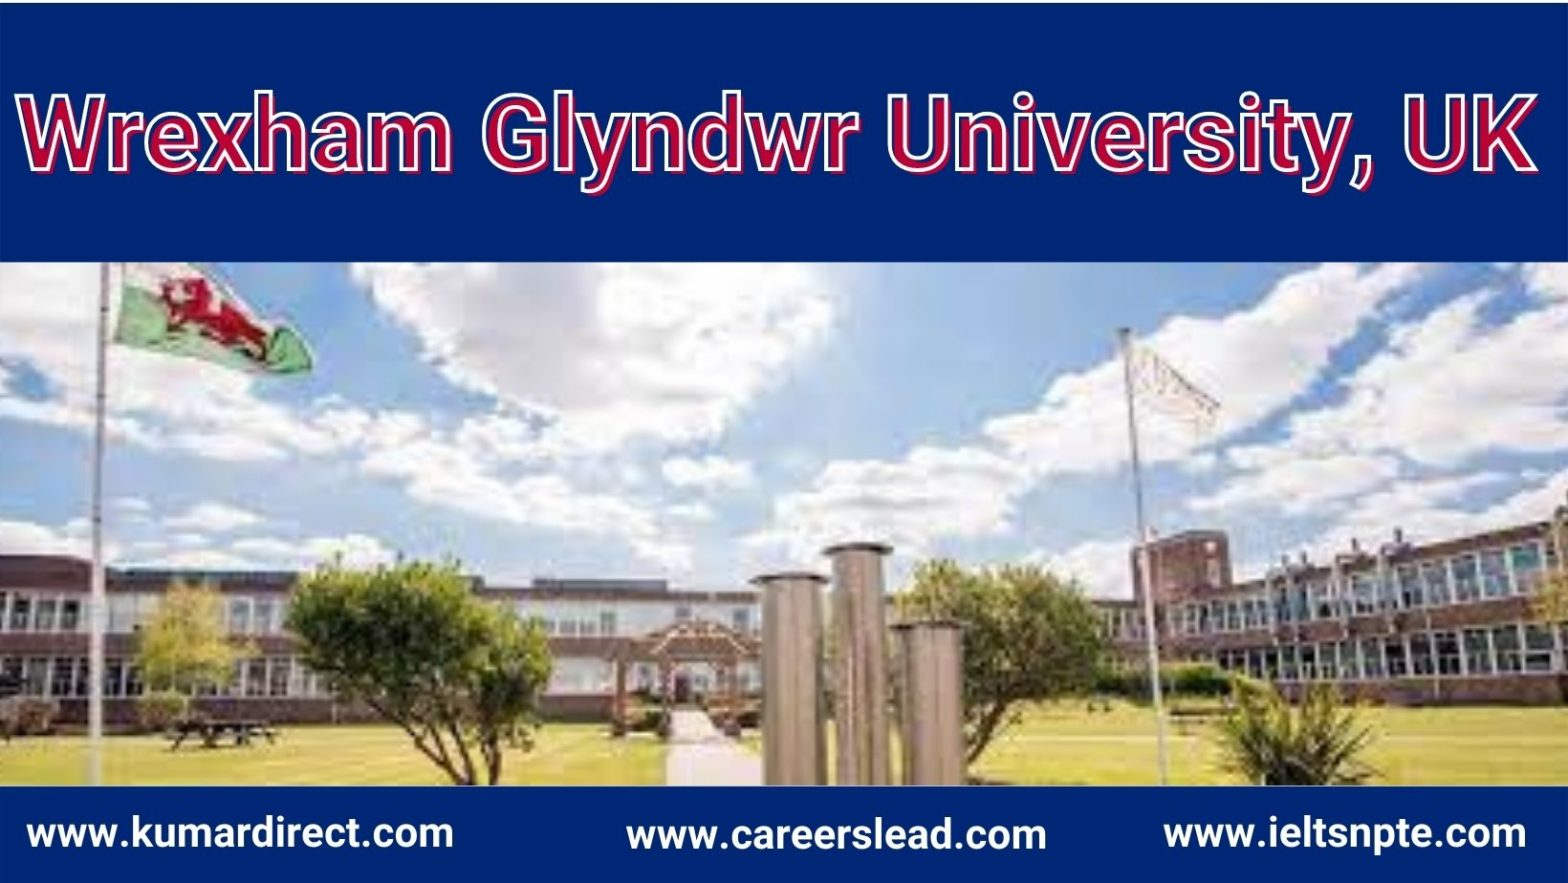 Wrexham Glyndwr University, UK